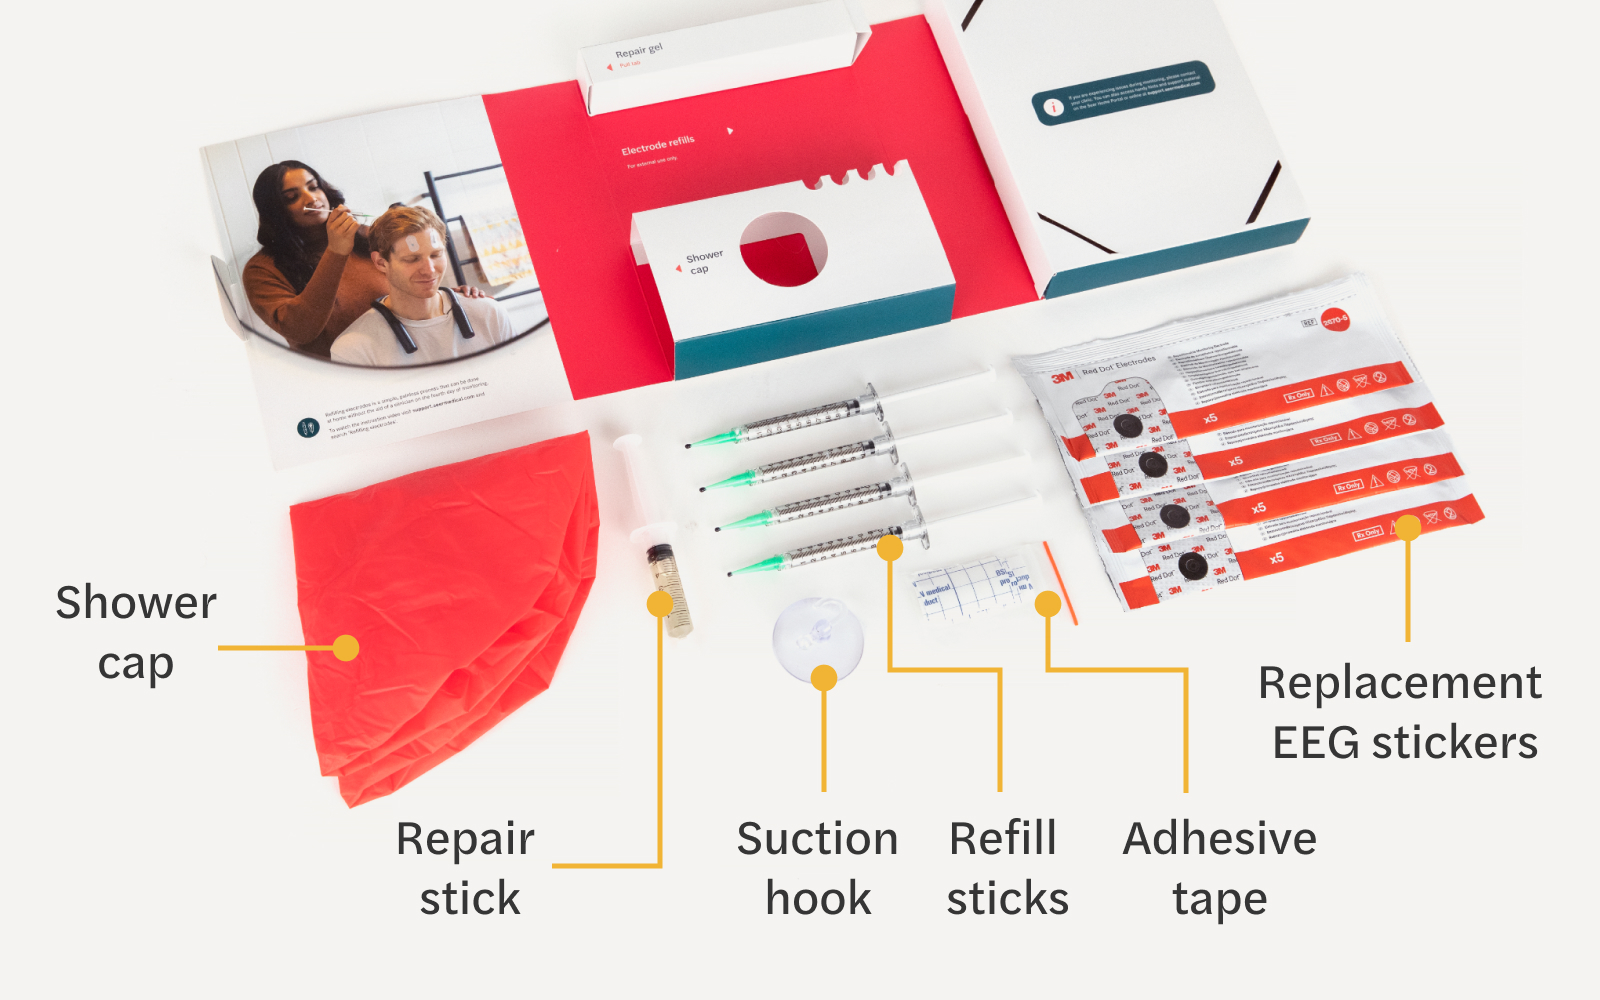 Seer Home Kit for patients.jpg